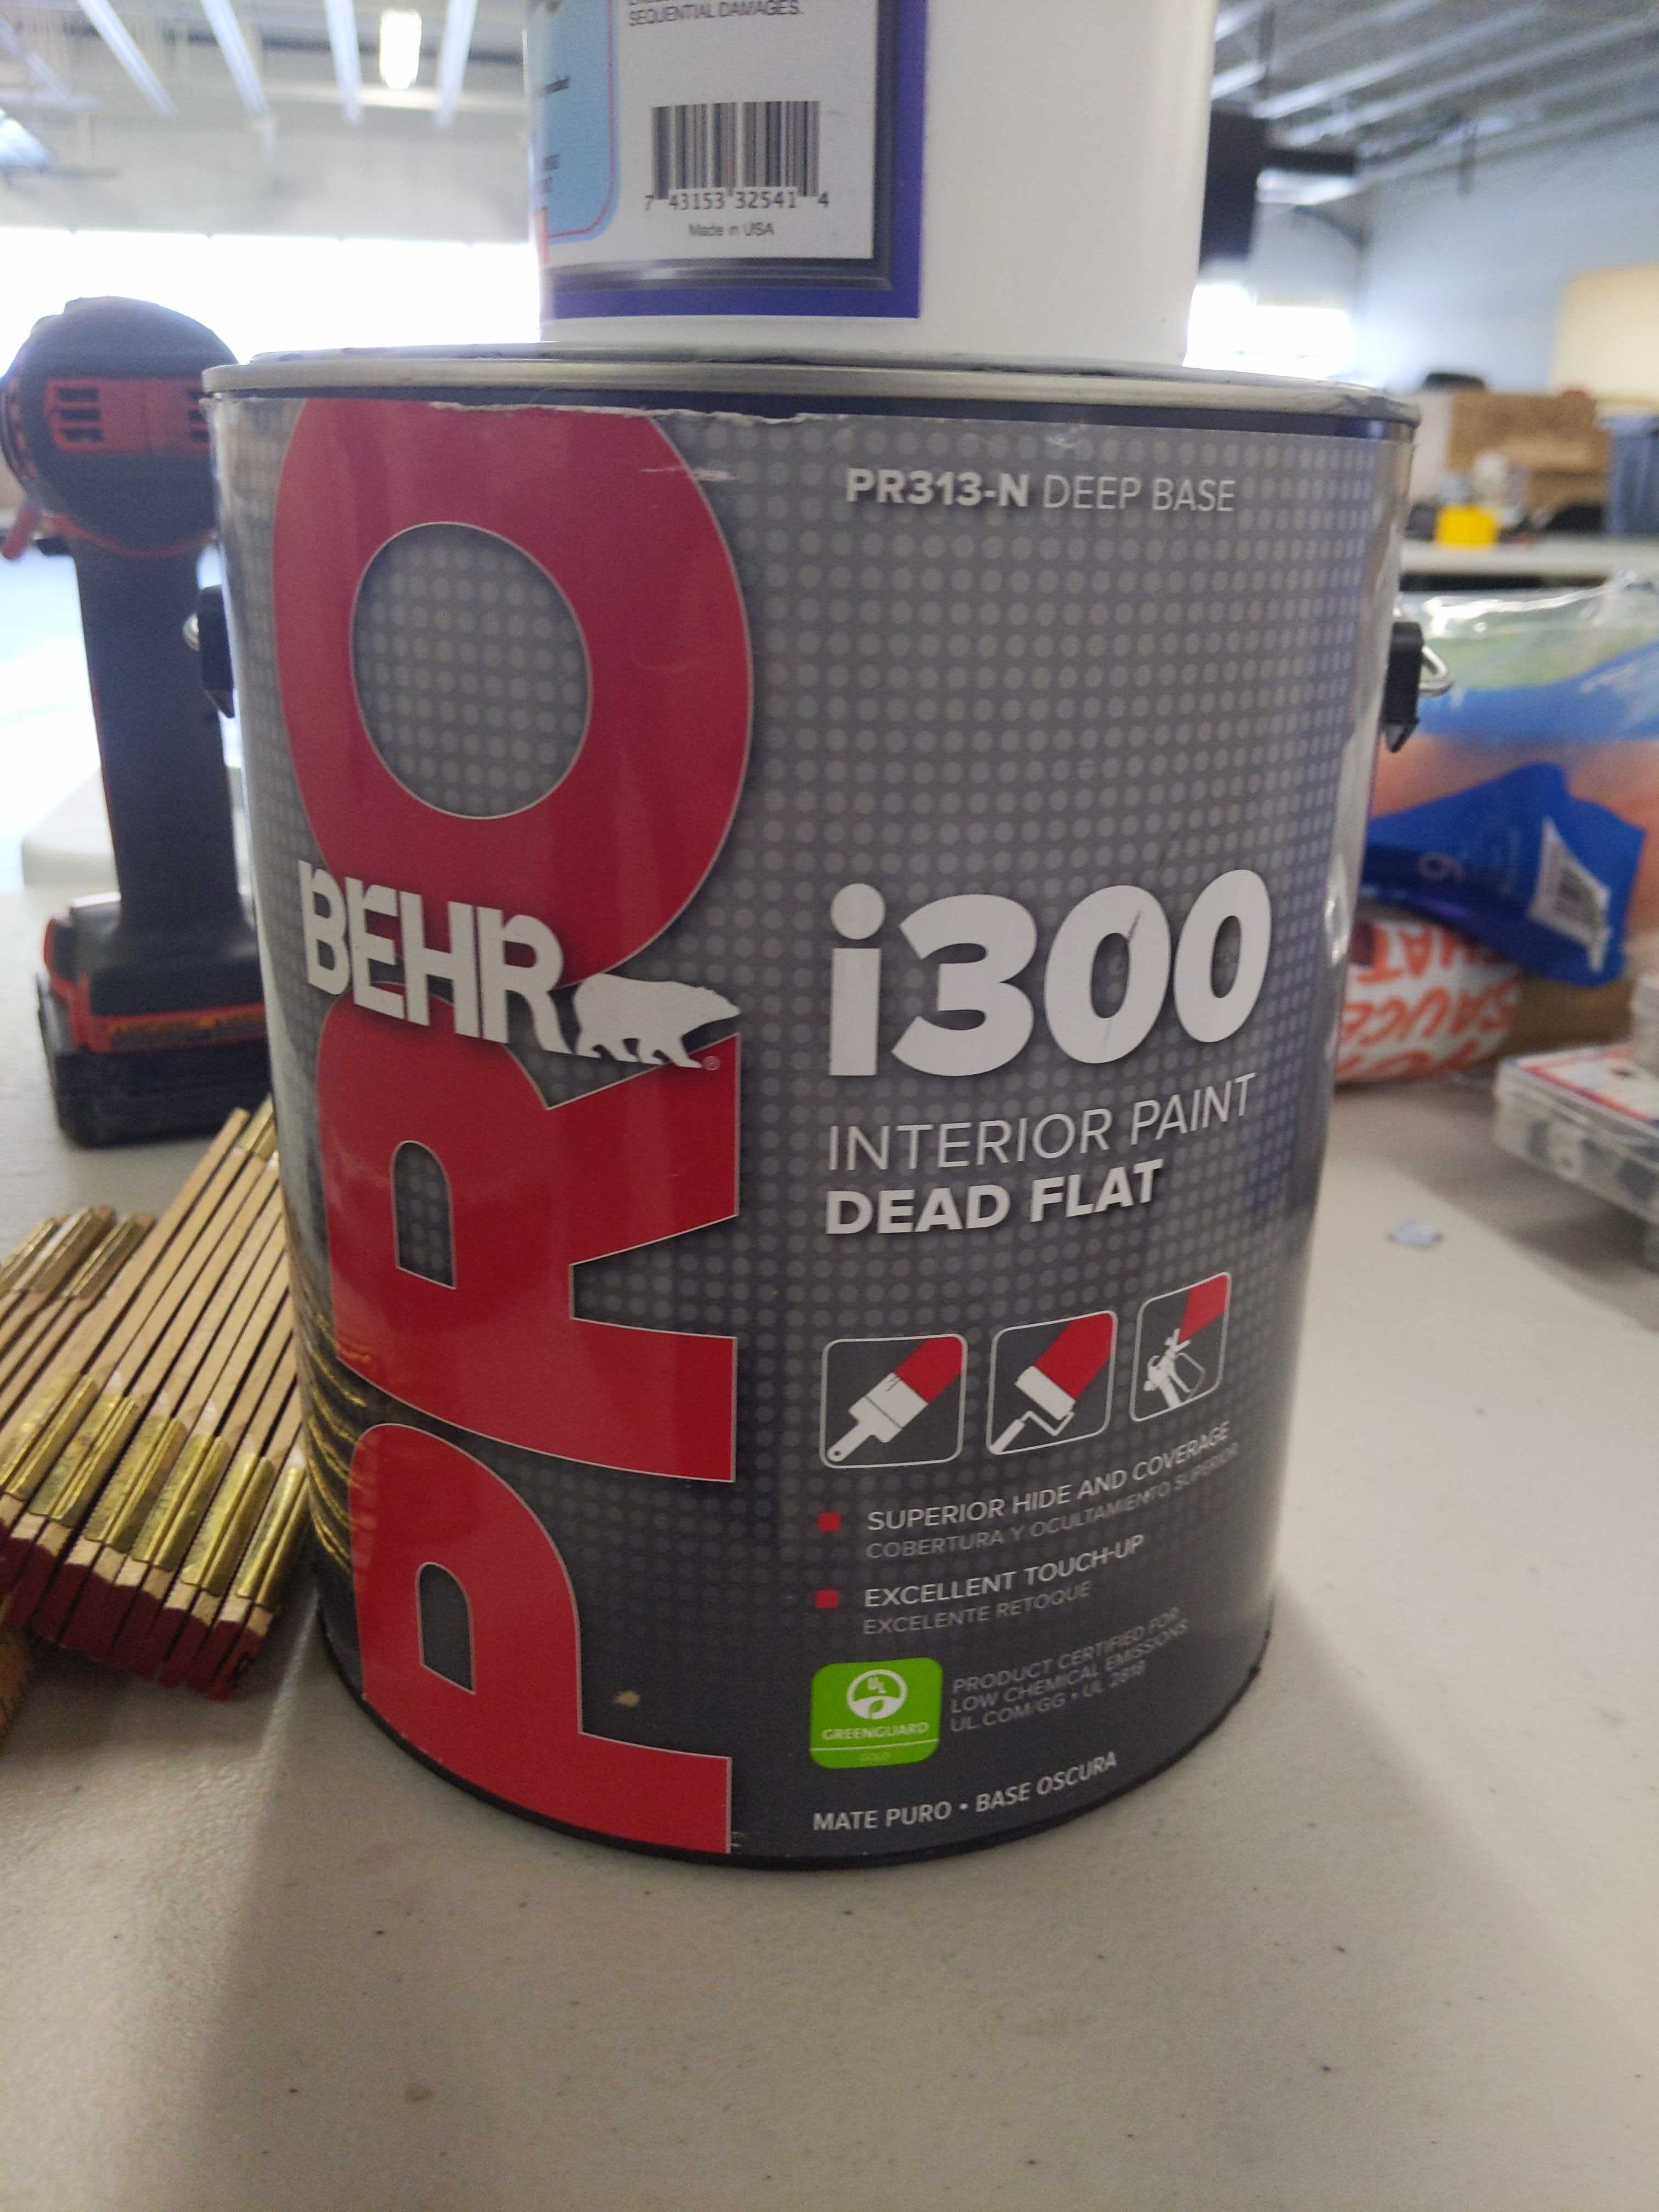 Behr Pro i300 Dead Flat paint